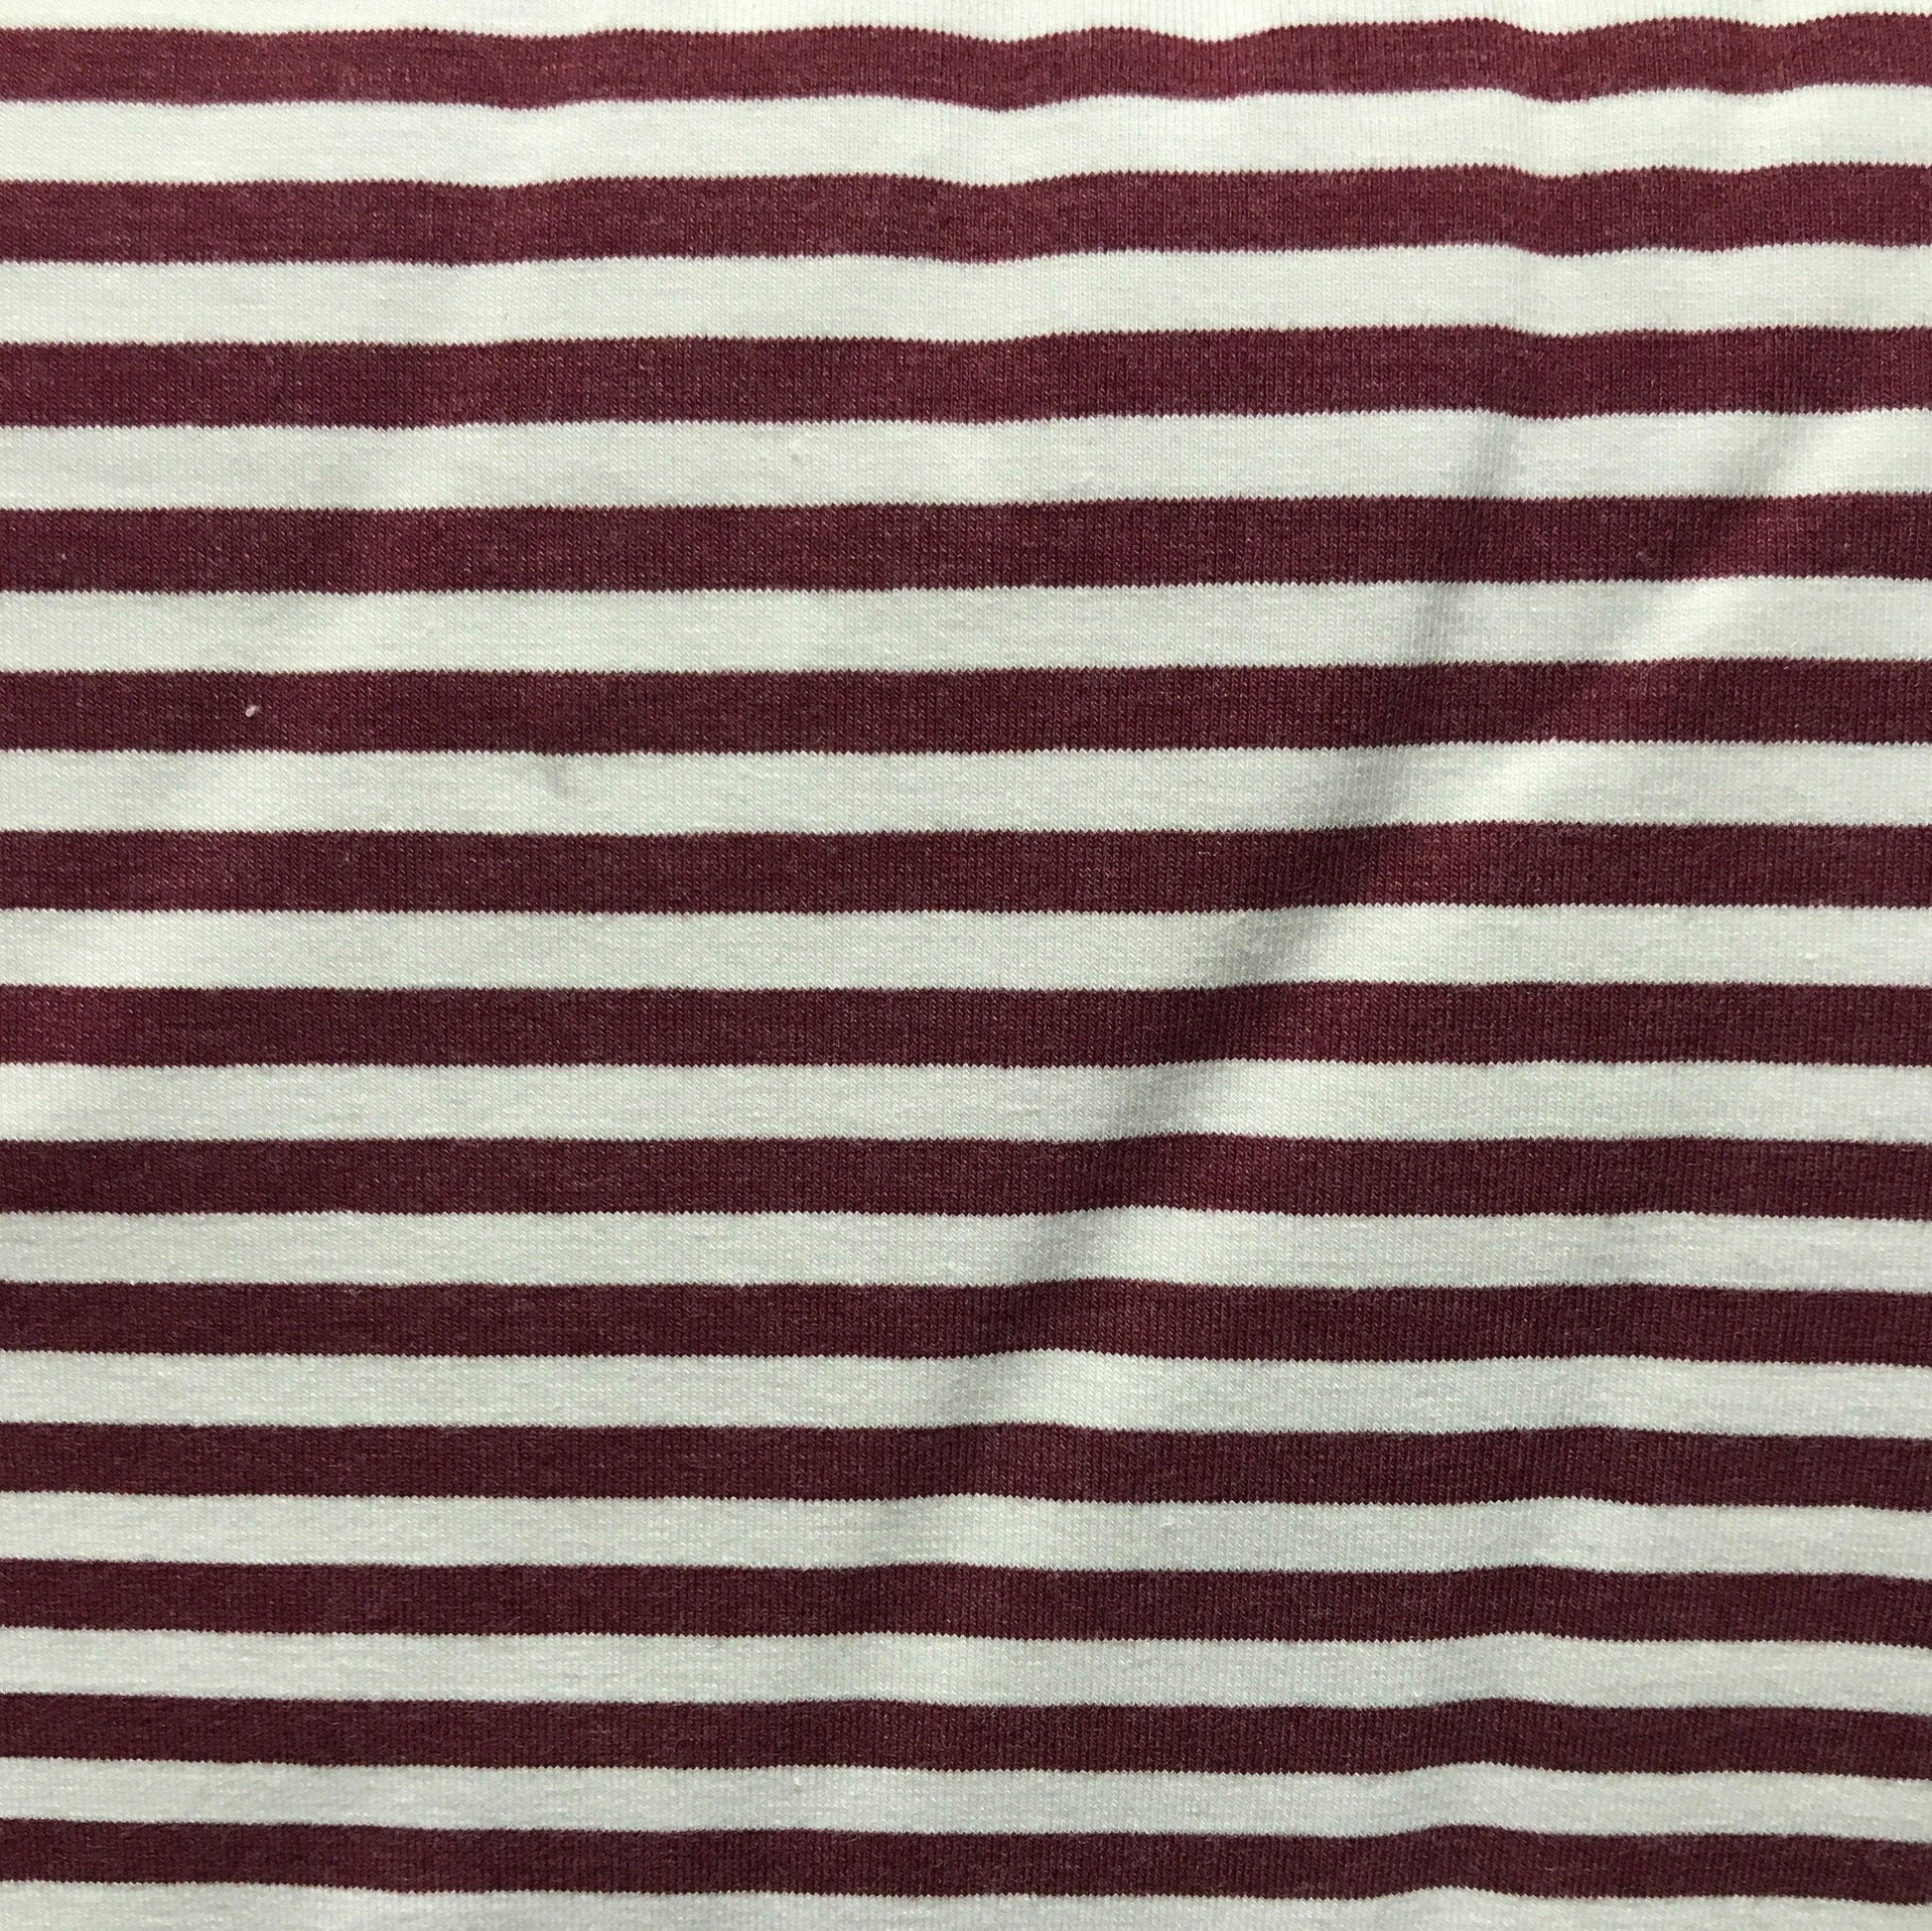 Burgundy and White 1/4" Stripe on Cotton/Spandex Jersey Fabric - Nature's Fabrics